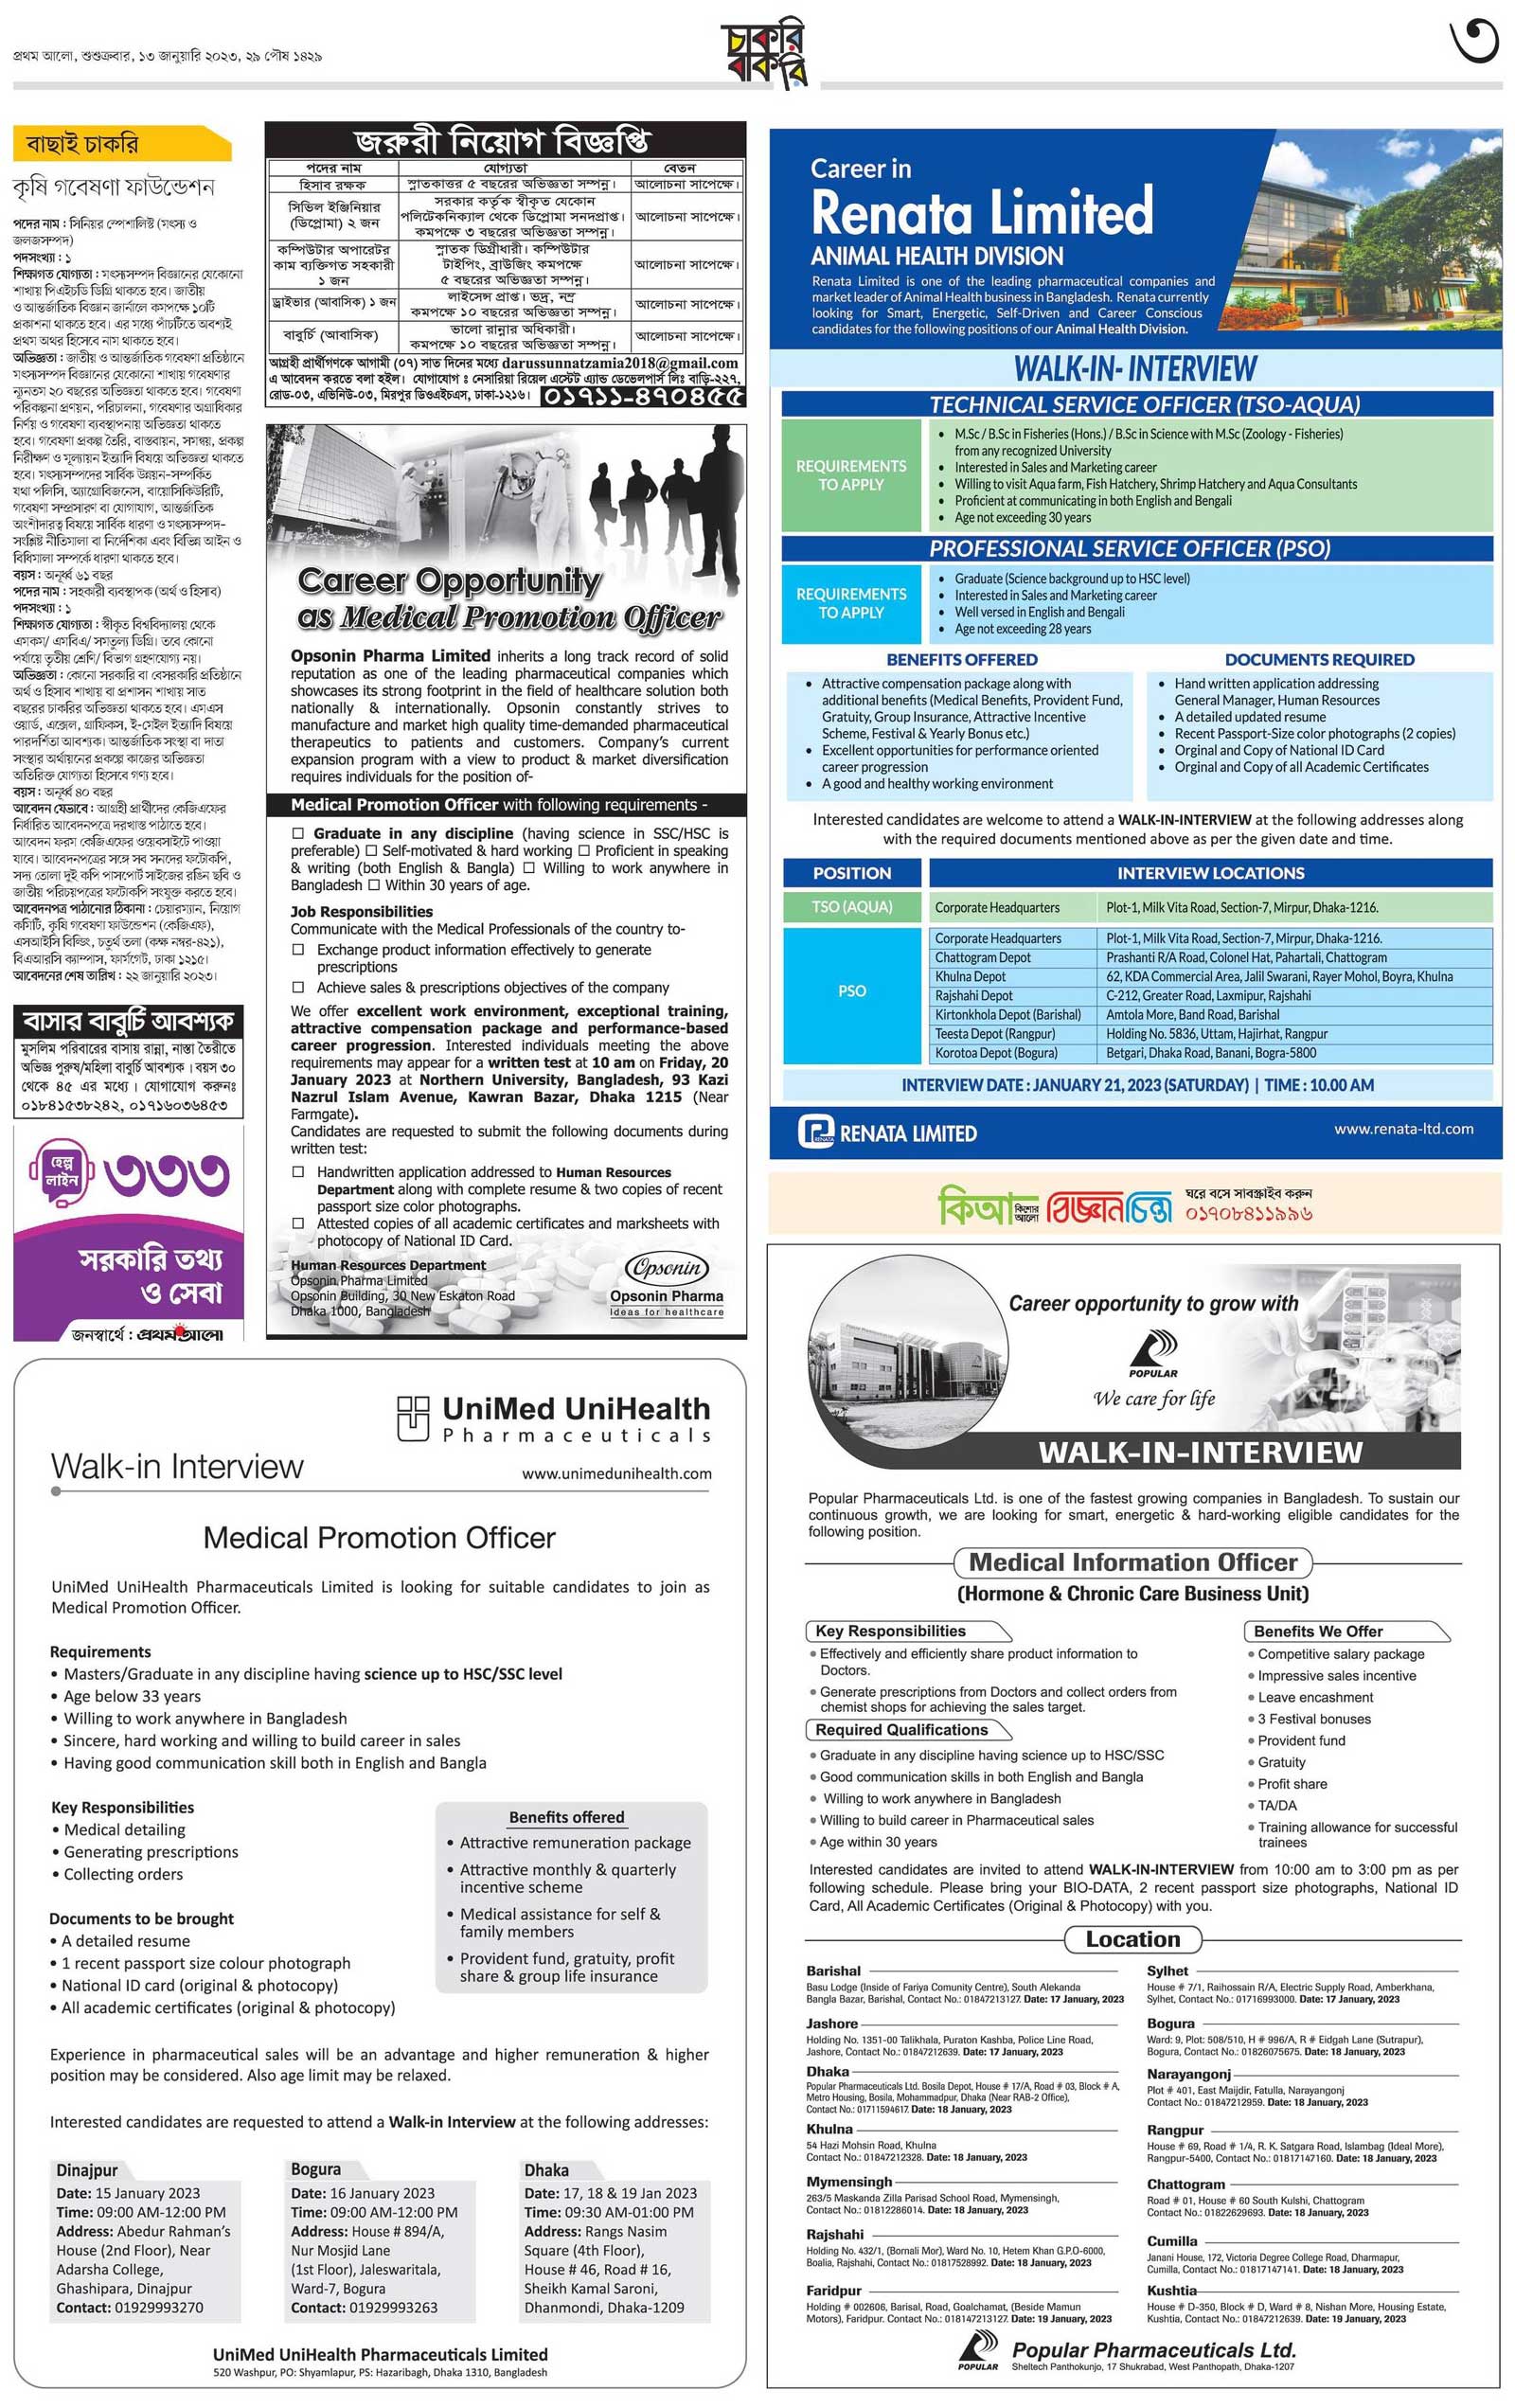 Prothom Alo Chakrir Khobor Chakri Bakri 13 January 2023 - প্রথম আলো চাকরির খবর চাকরি বাকরি ১৩ জানুয়ারি ২০২৩ - প্রথম আলো চাকরির খবর ১৩-০১-২০২৩ - Prothom Alo Job circular 2023 - প্রথম আলো চাকরির খবর 2023 - prothom alo chakri bakri 2023-2024 - চাকরি বাকরি ২০২৩-২০২৪ - চাকরি বাকরি প্রথম আলো 2023